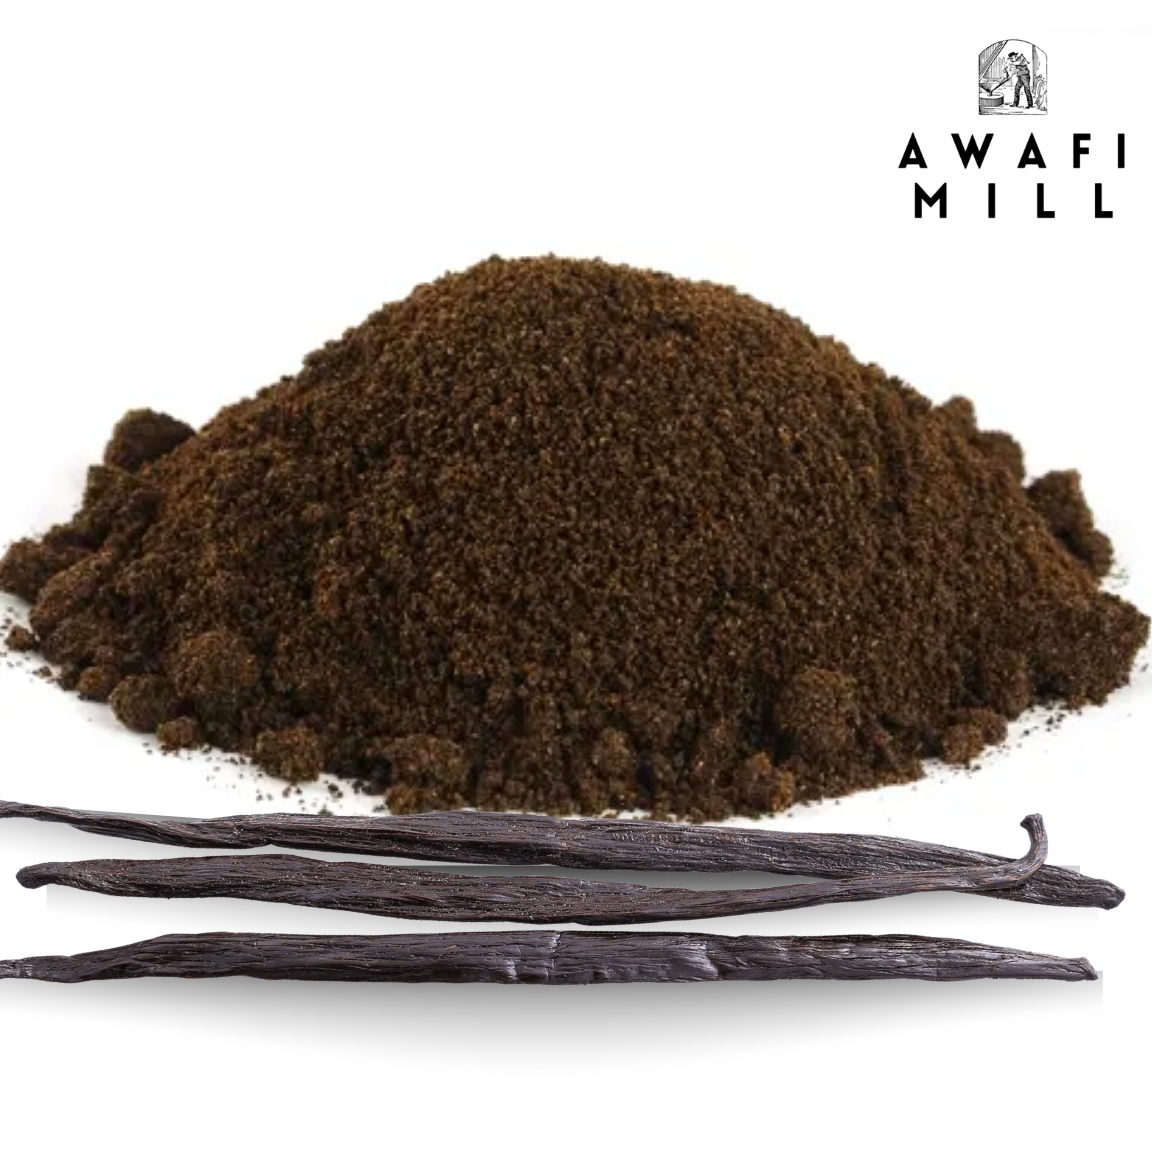 Ugandanr grade a vanilla powder | ugandan grade a vanilla | vanilla powder | awafi mill